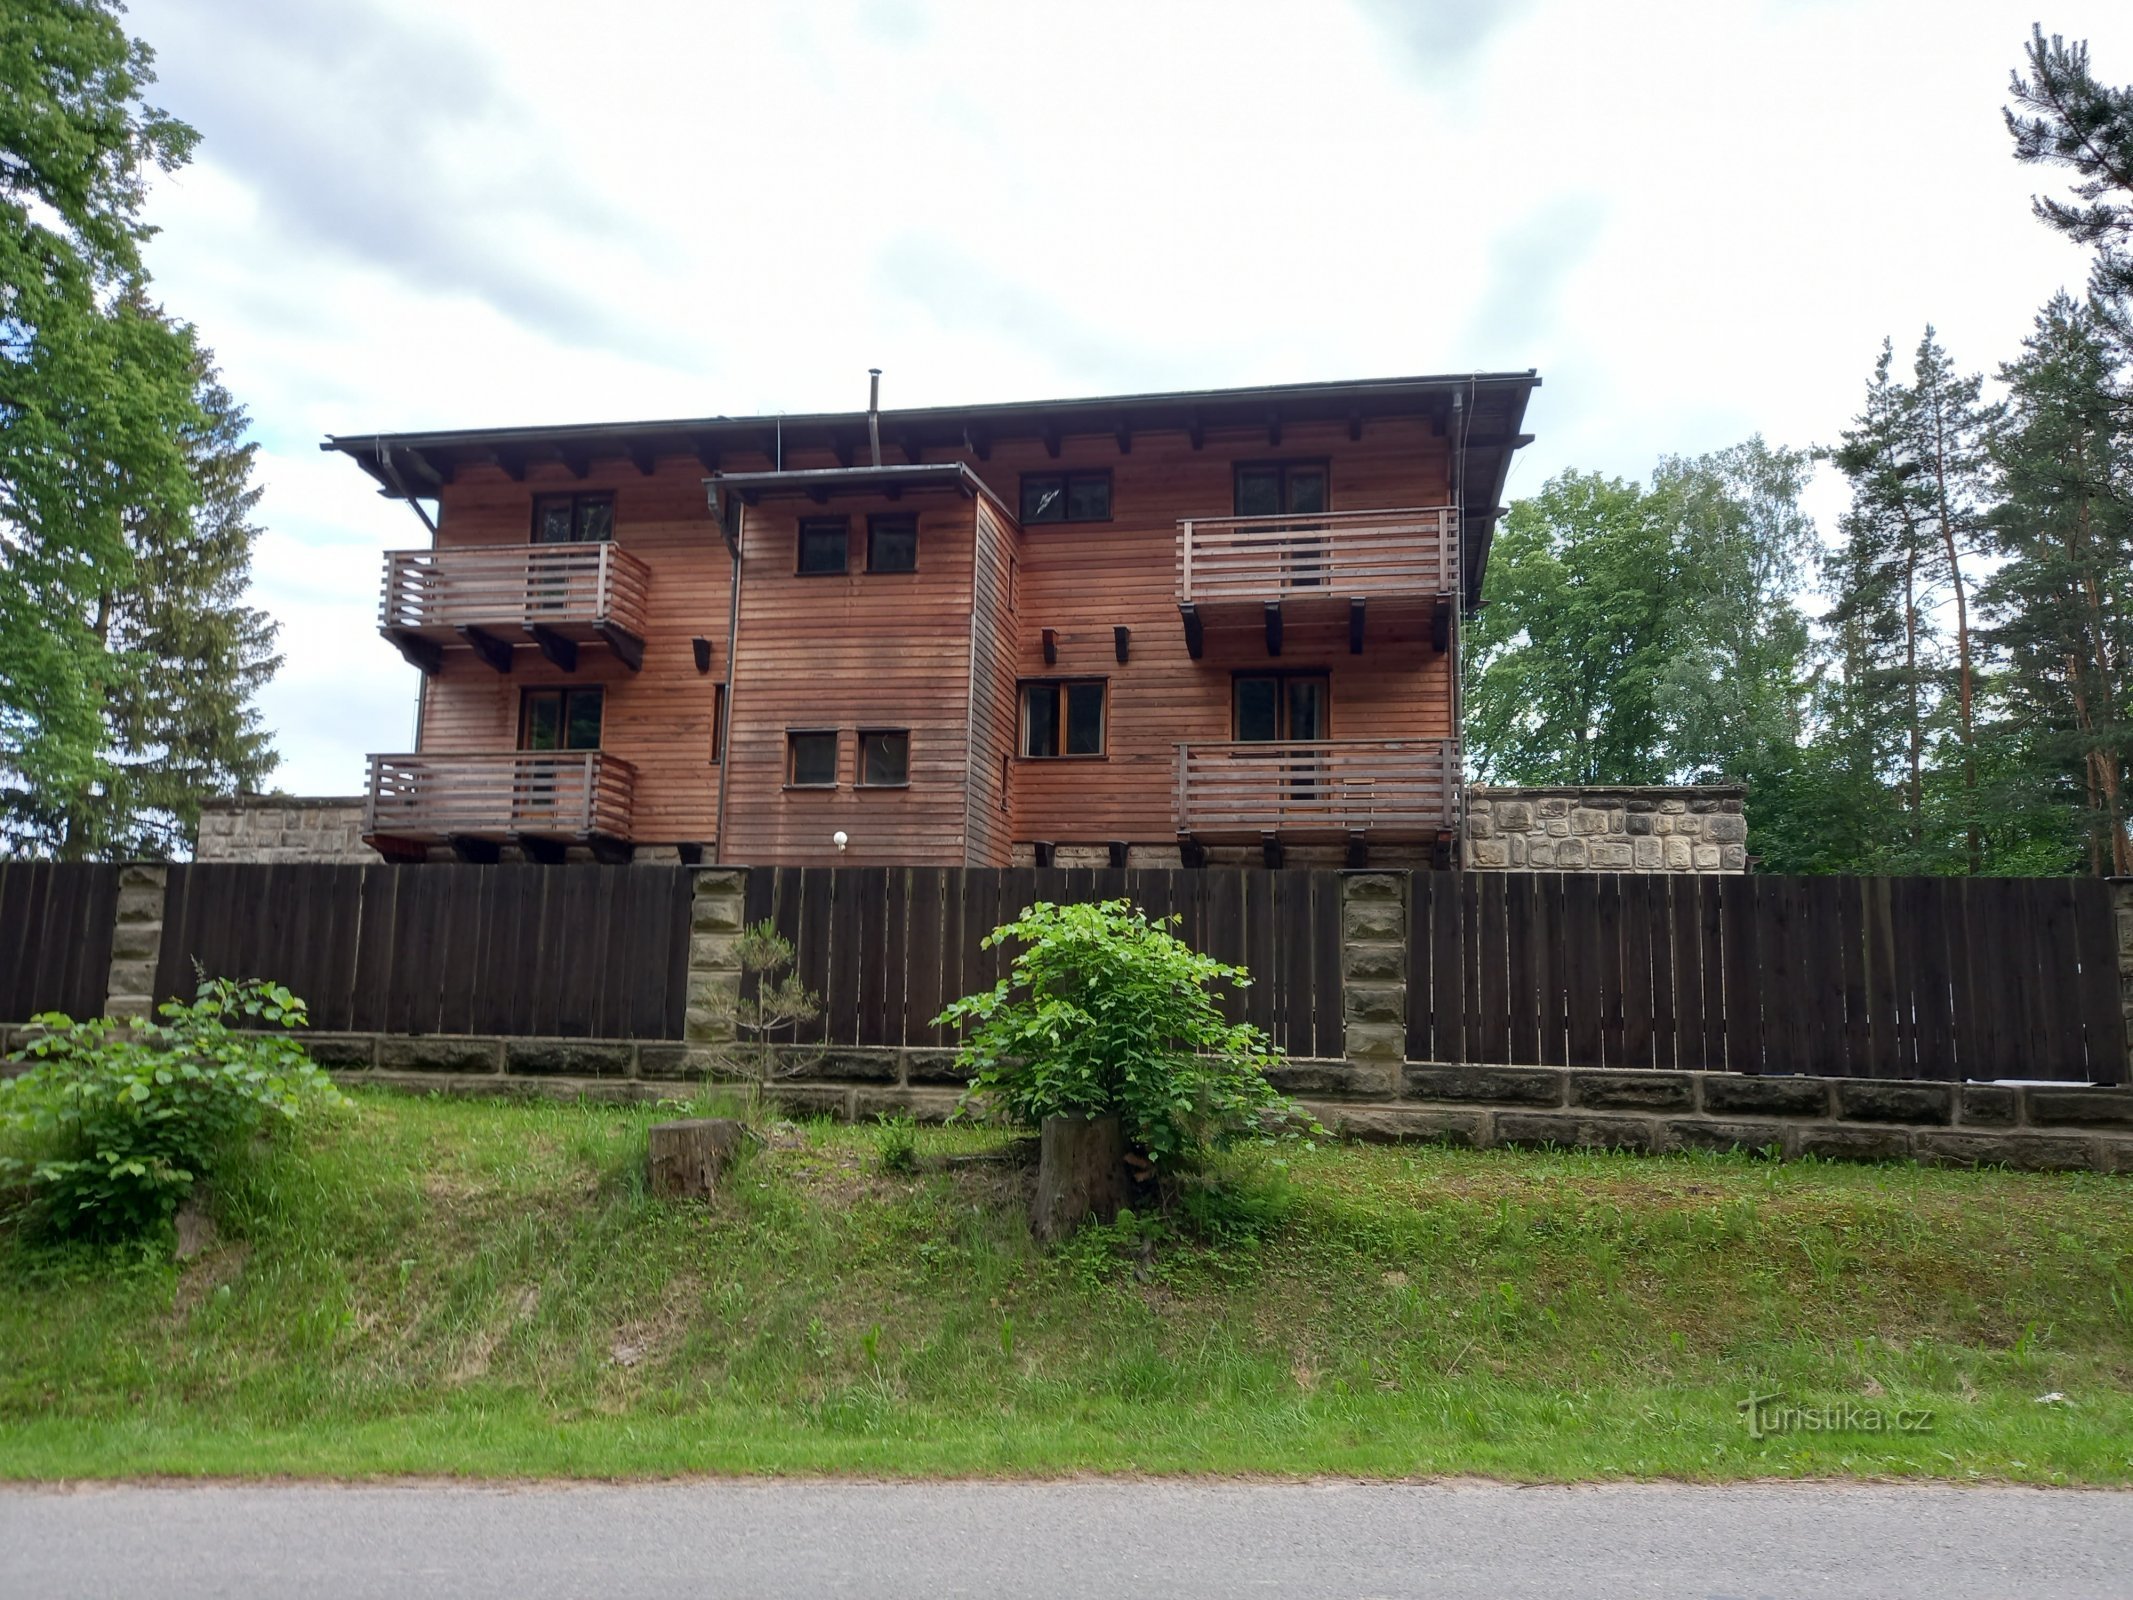 Čapk-brödernas hus i Budislav